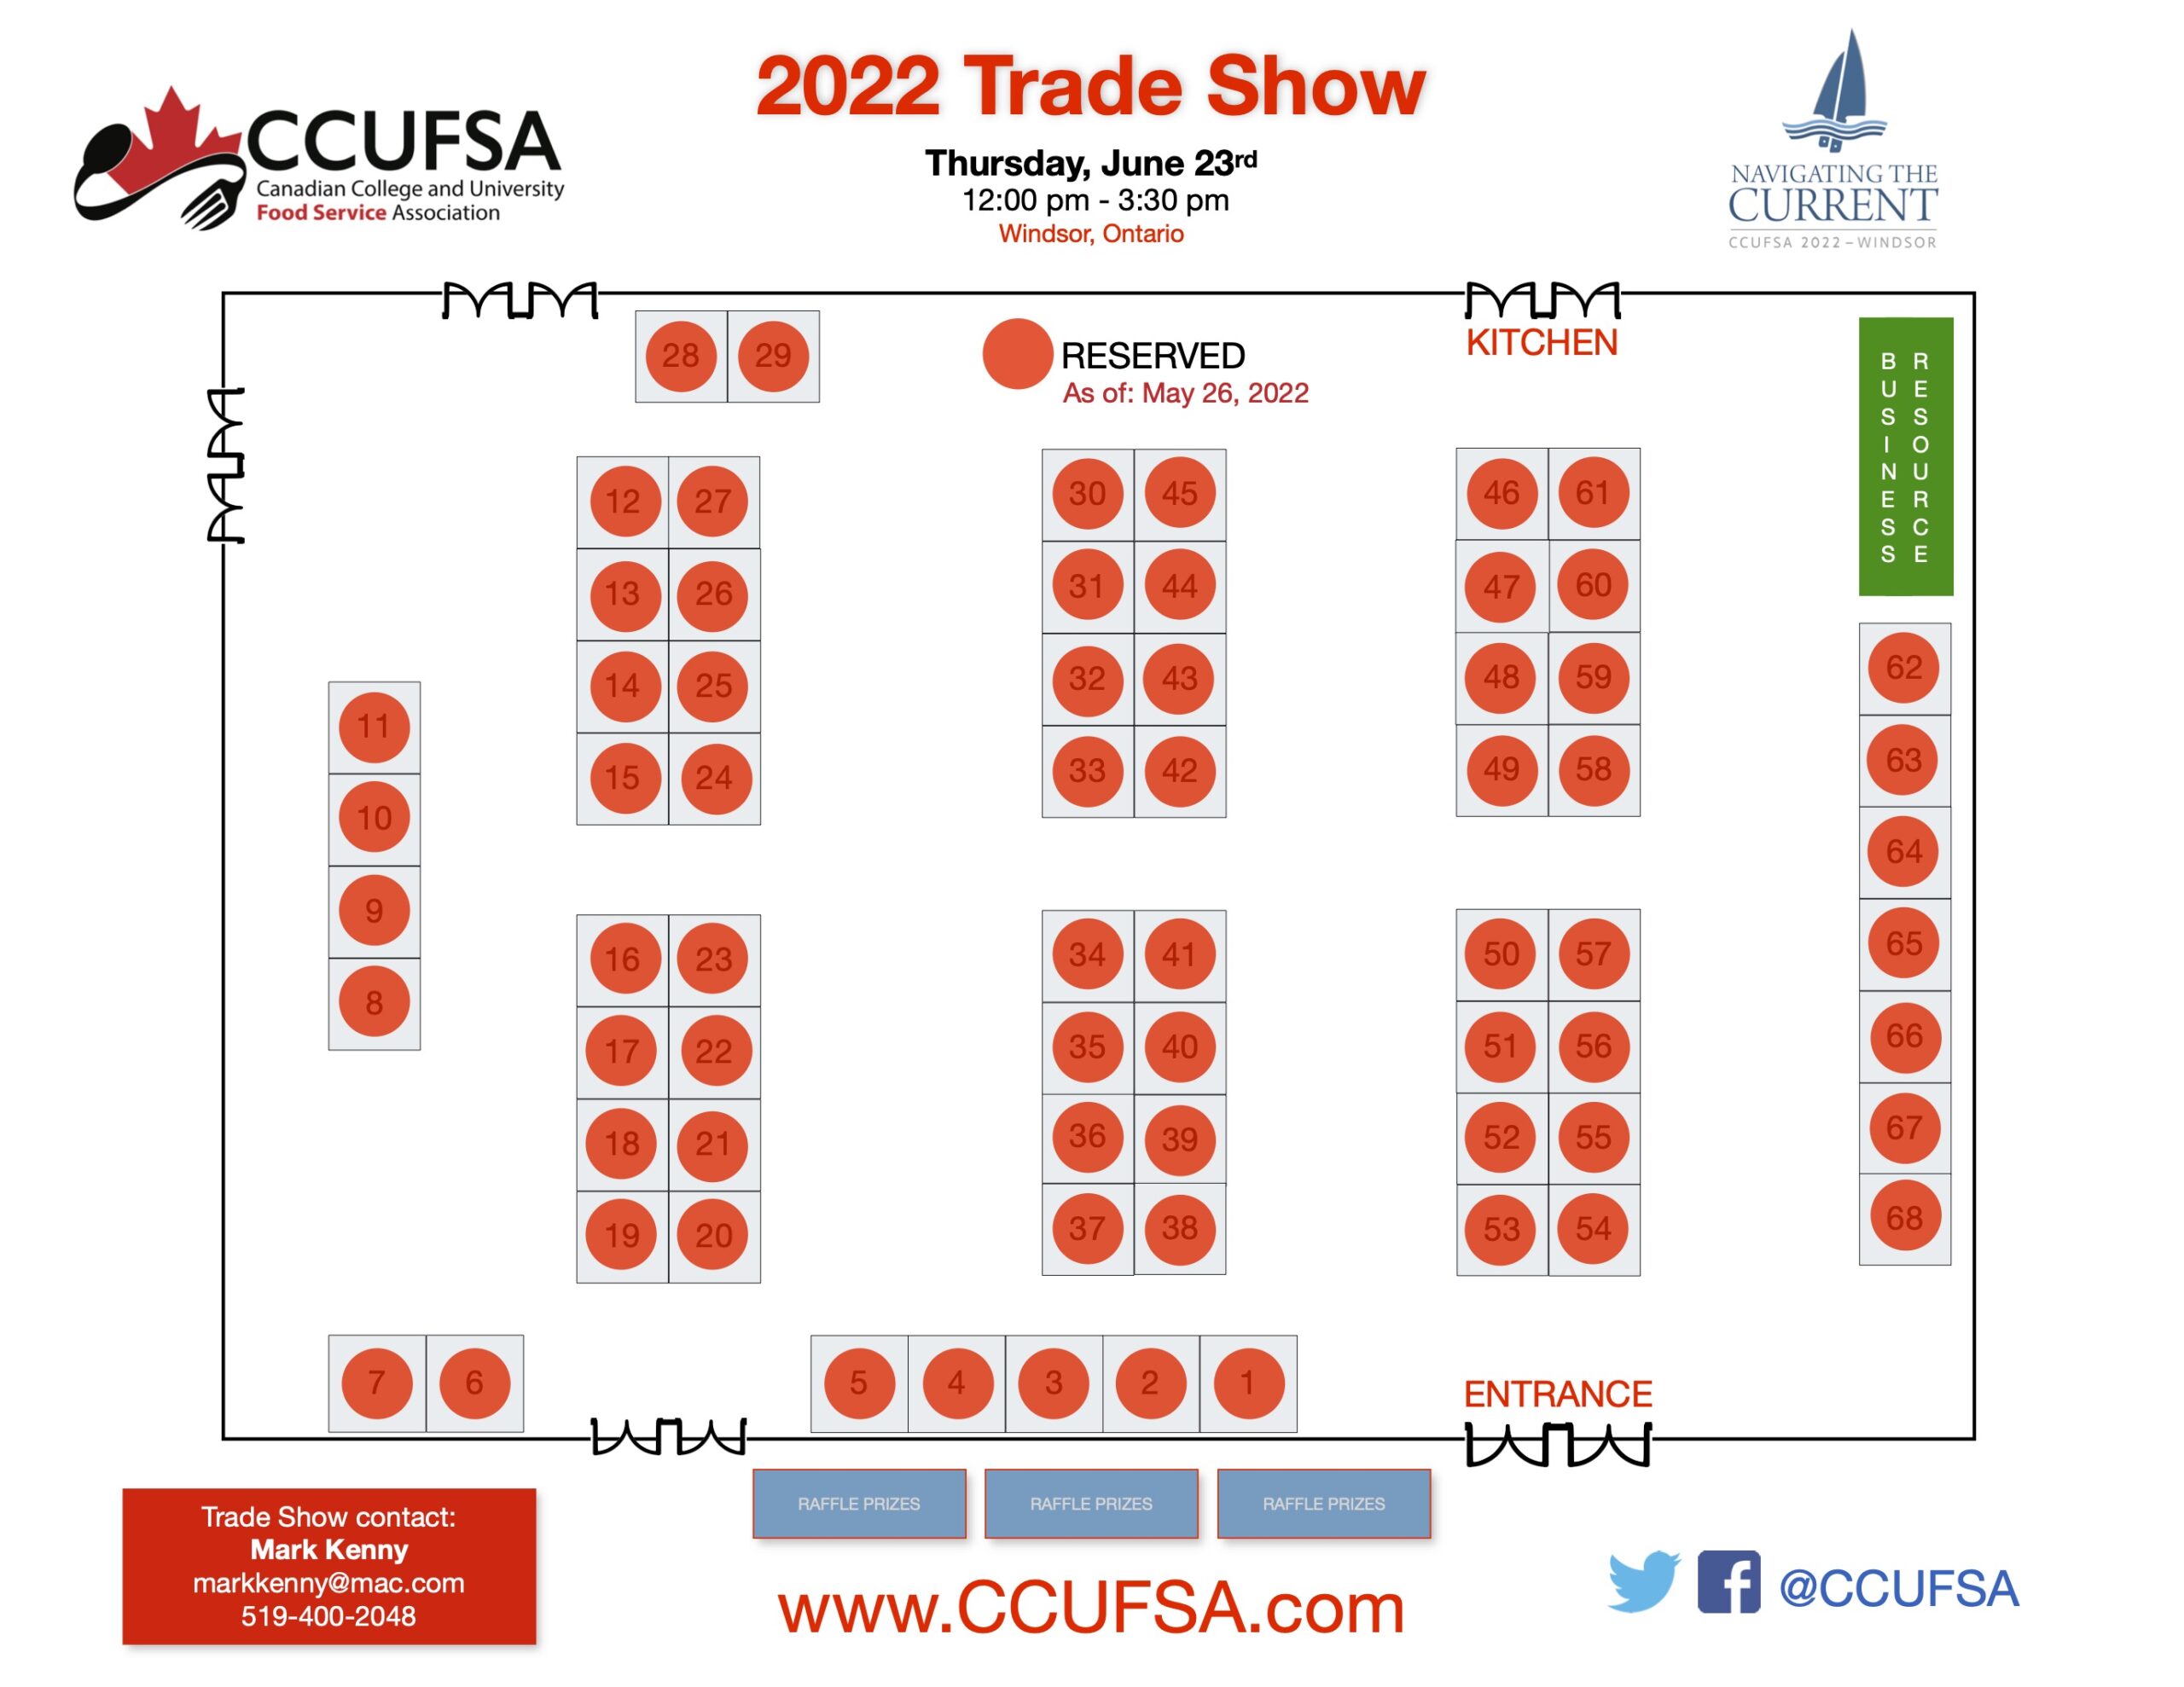 Trade Show Map